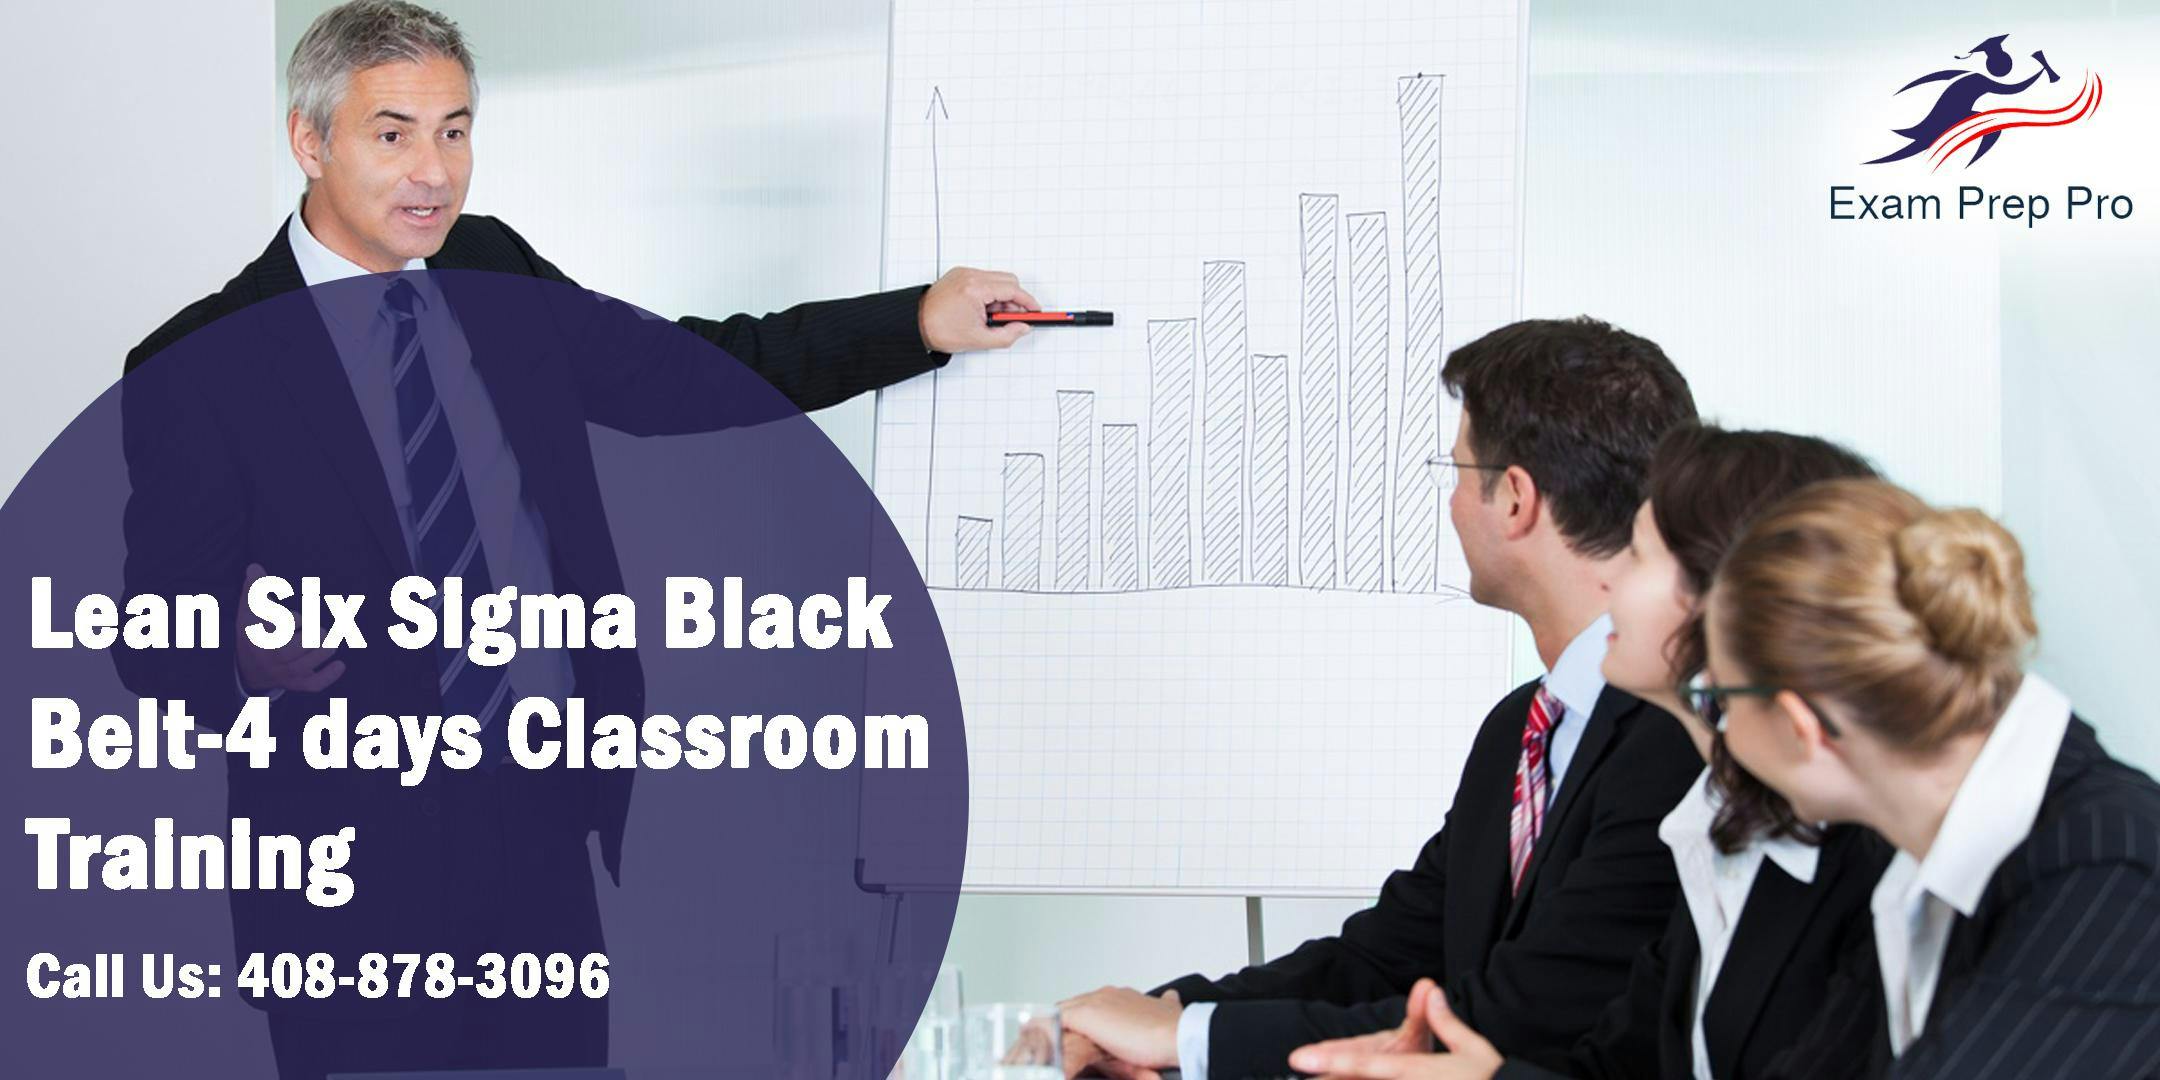 Lean Six Sigma Black Belt-4 days Classroom Training in Sioux Falls,SD